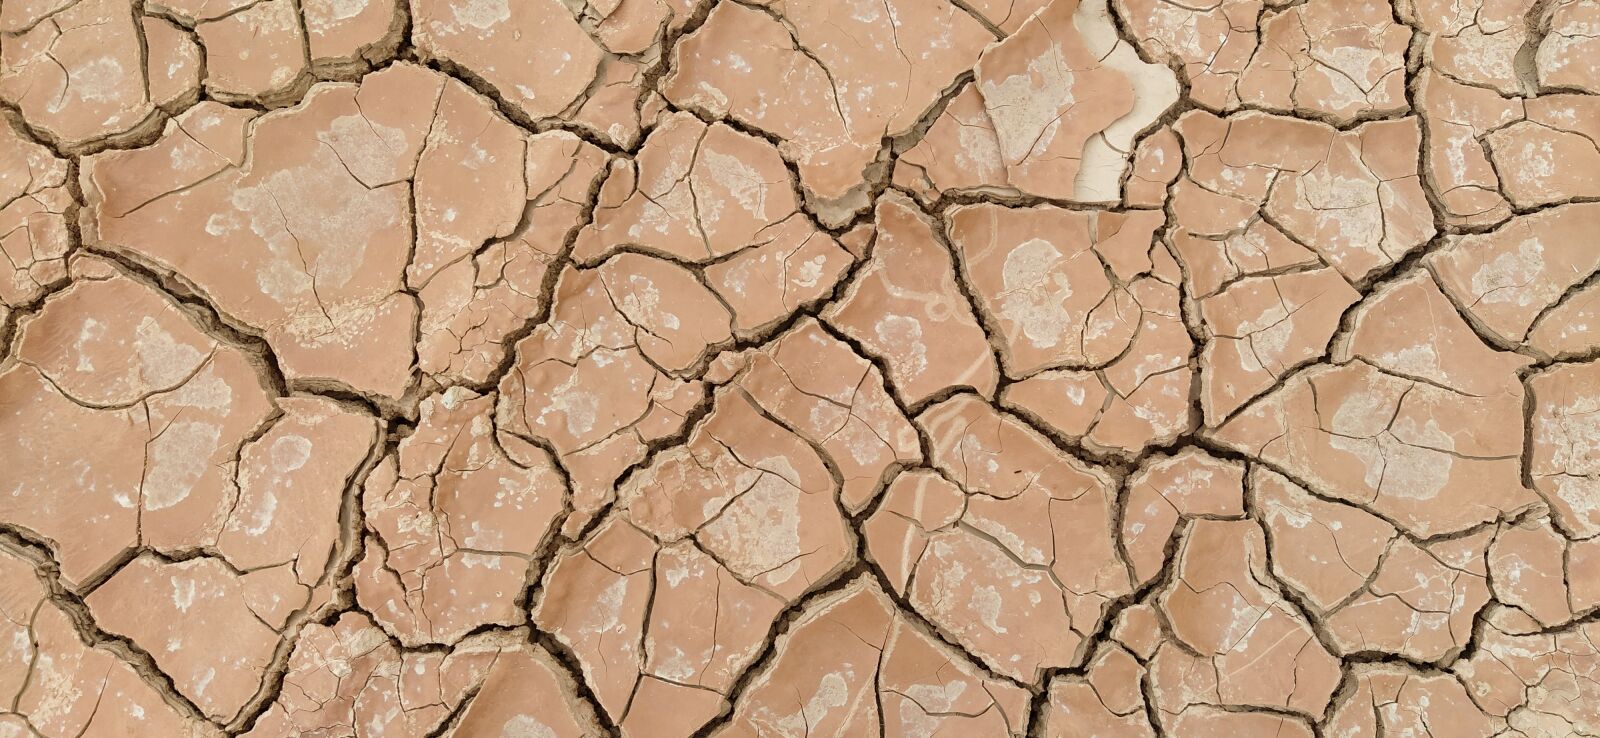 Xiaomi Mi A3 sample photo. Erosion, dried, soil photography